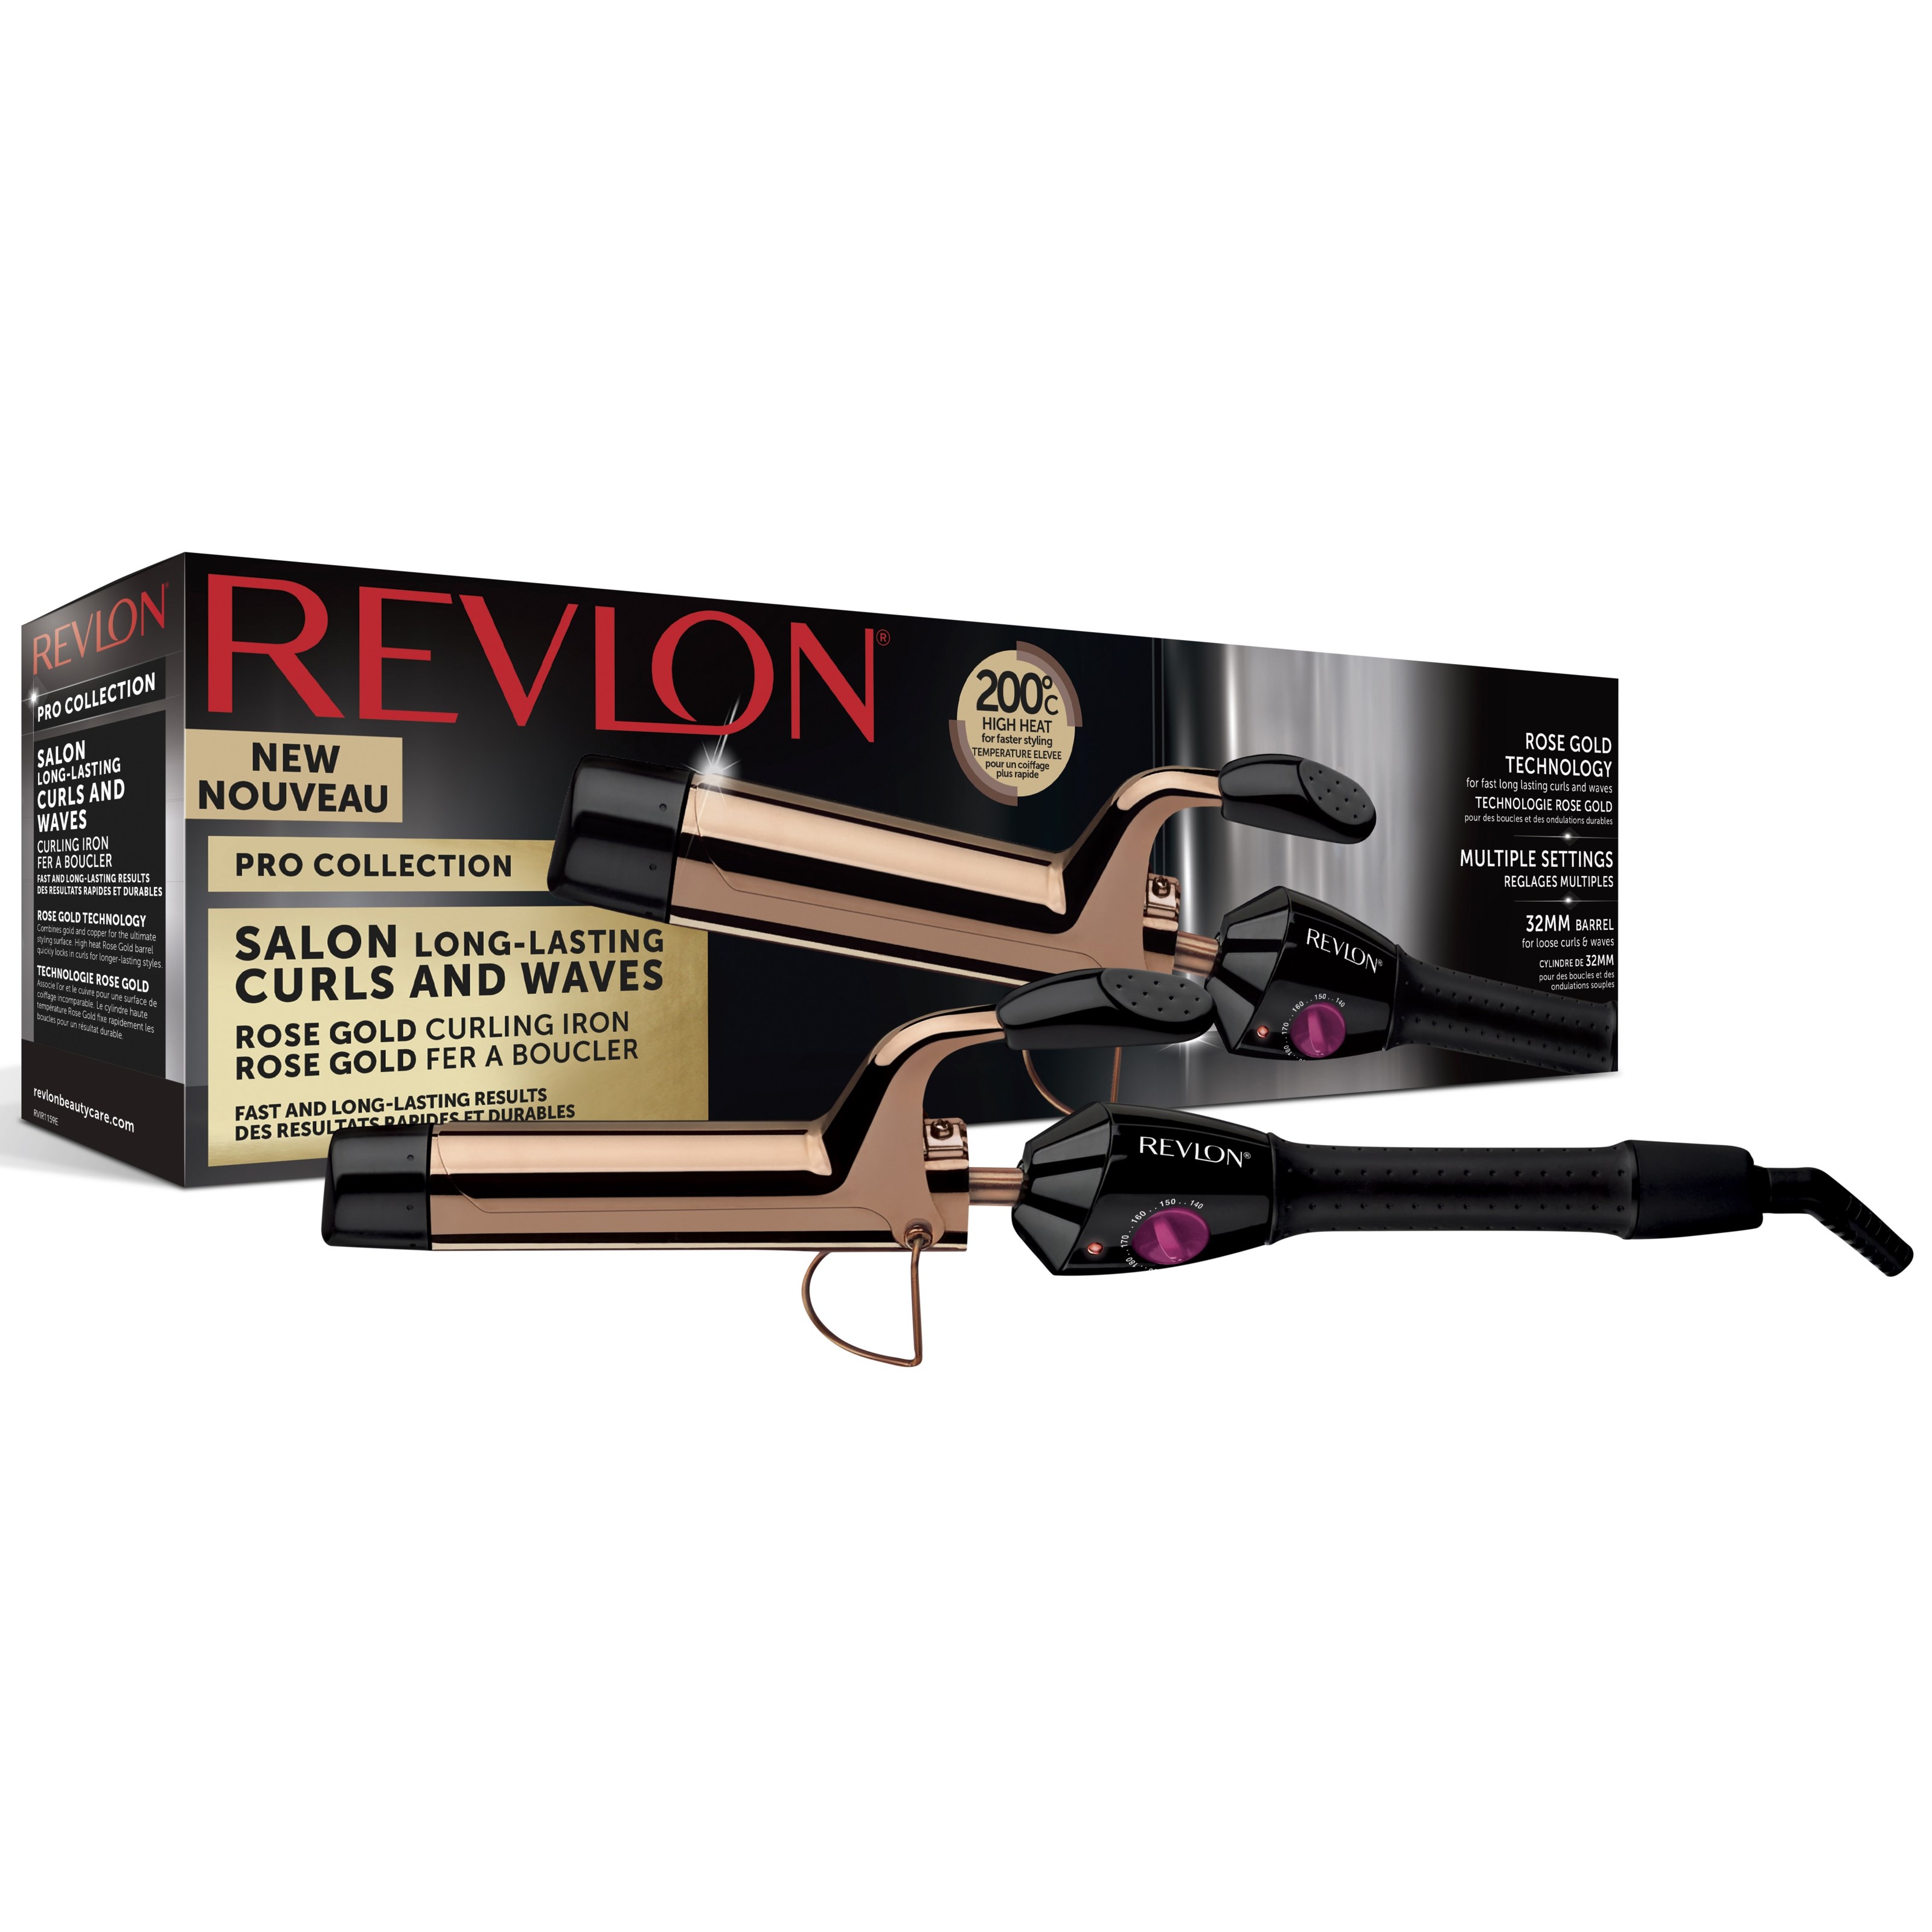 Revlon Tools Revlon Salon Long-lasting Curls and Waves Rose Gold lockt